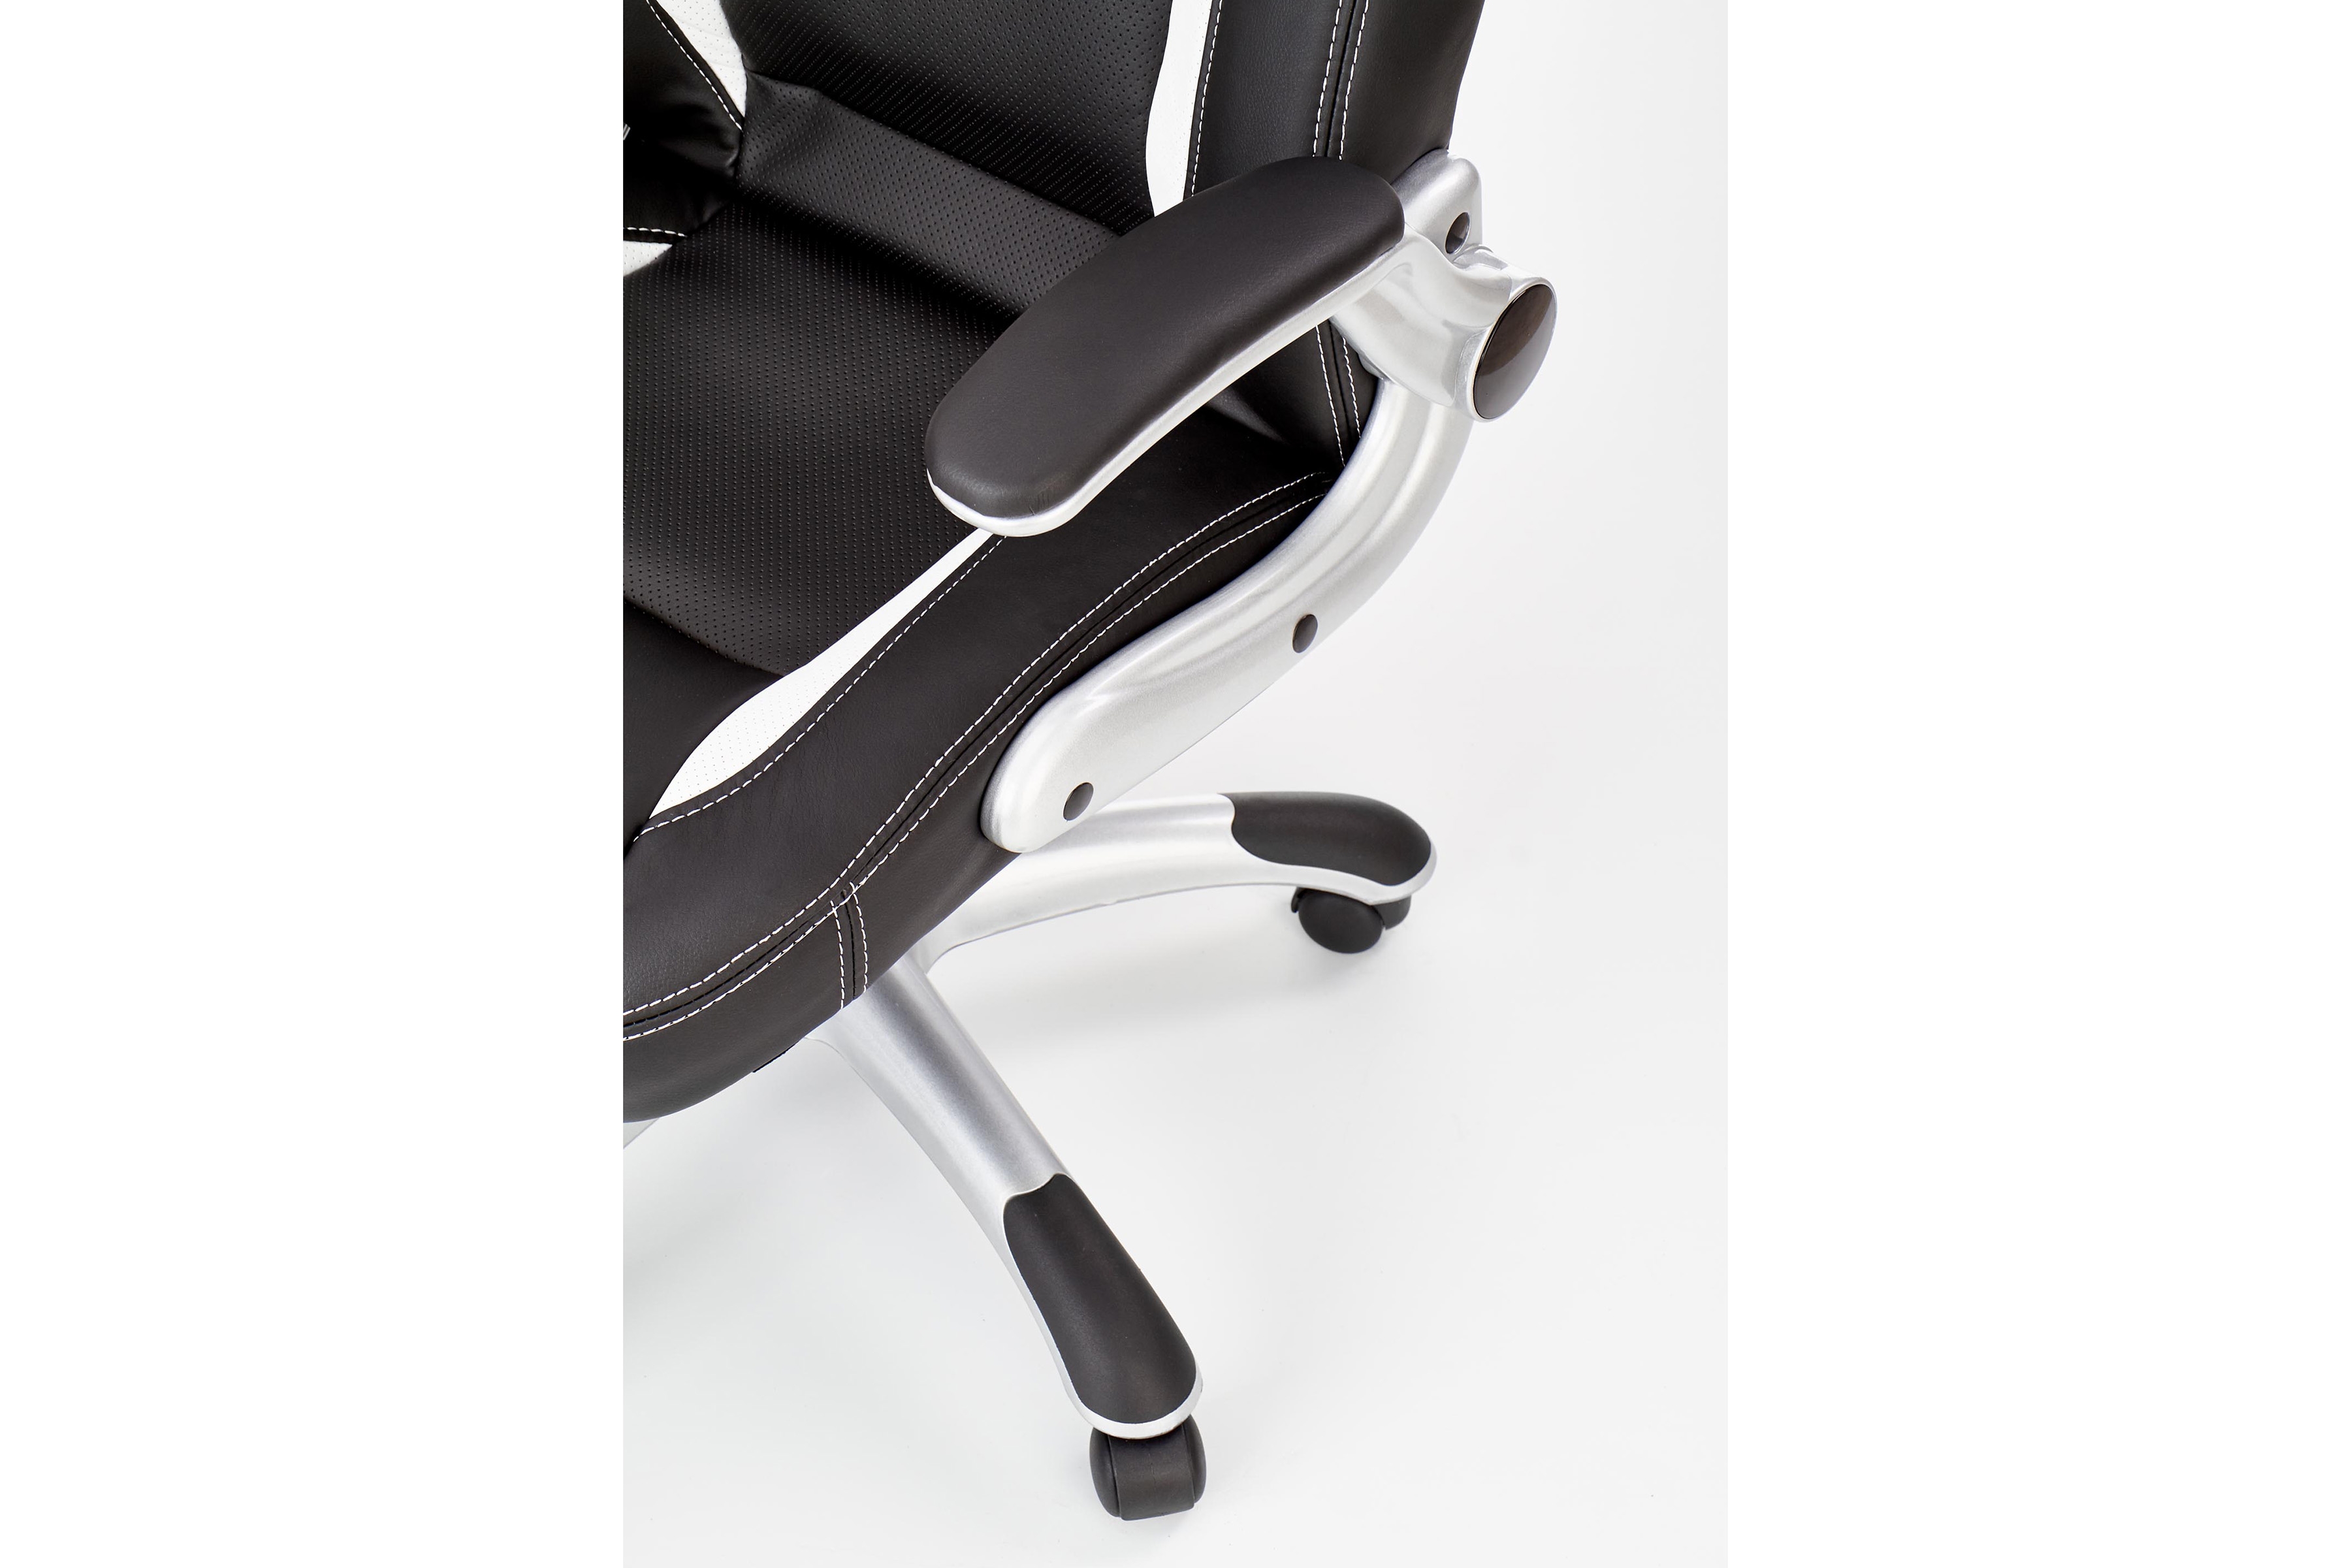 Saturn modern irodai szék - fekete korszerű fotel iroda Saturn z podlokietnikami - fekete